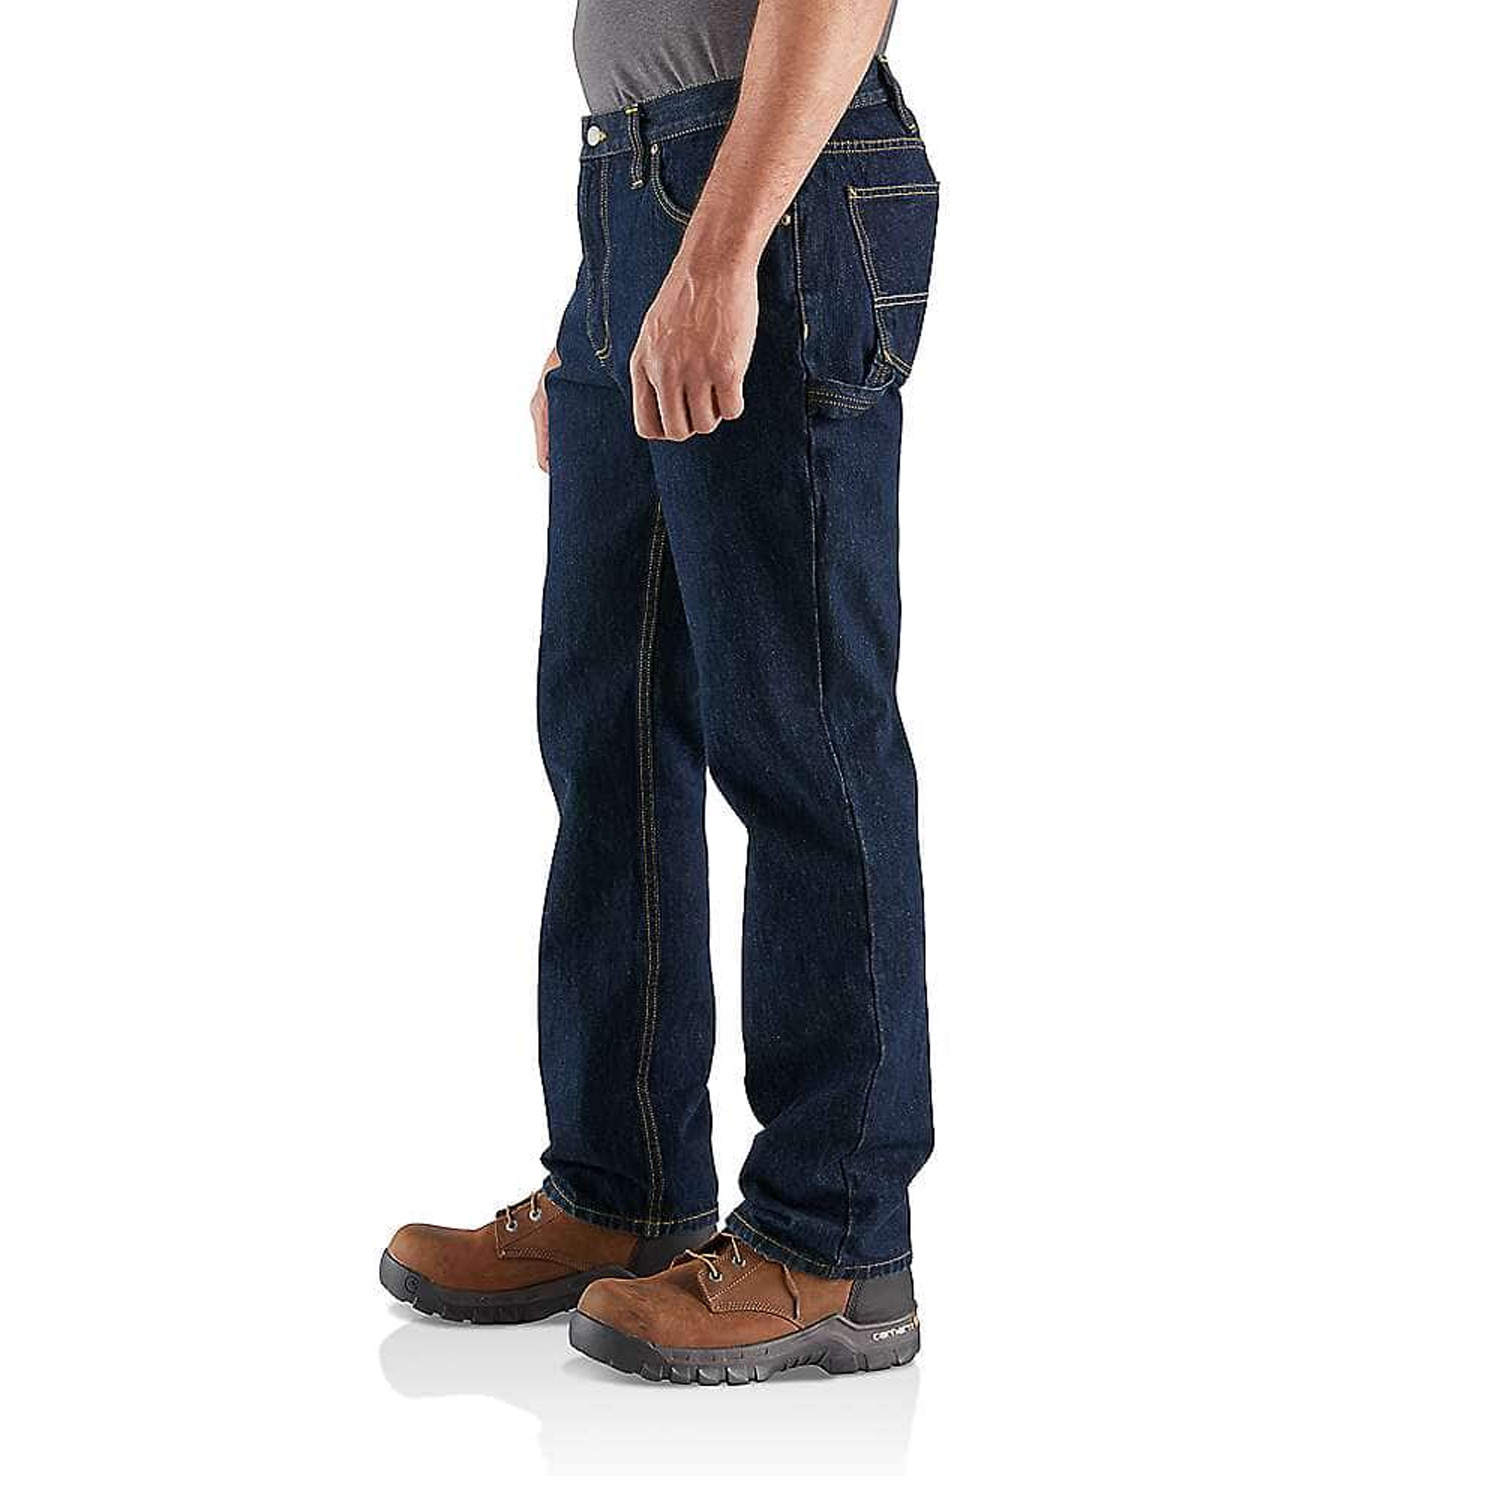 Carhartt Rugged Flex Relaxed Fit Heavyweight 5-Pocket Jeans